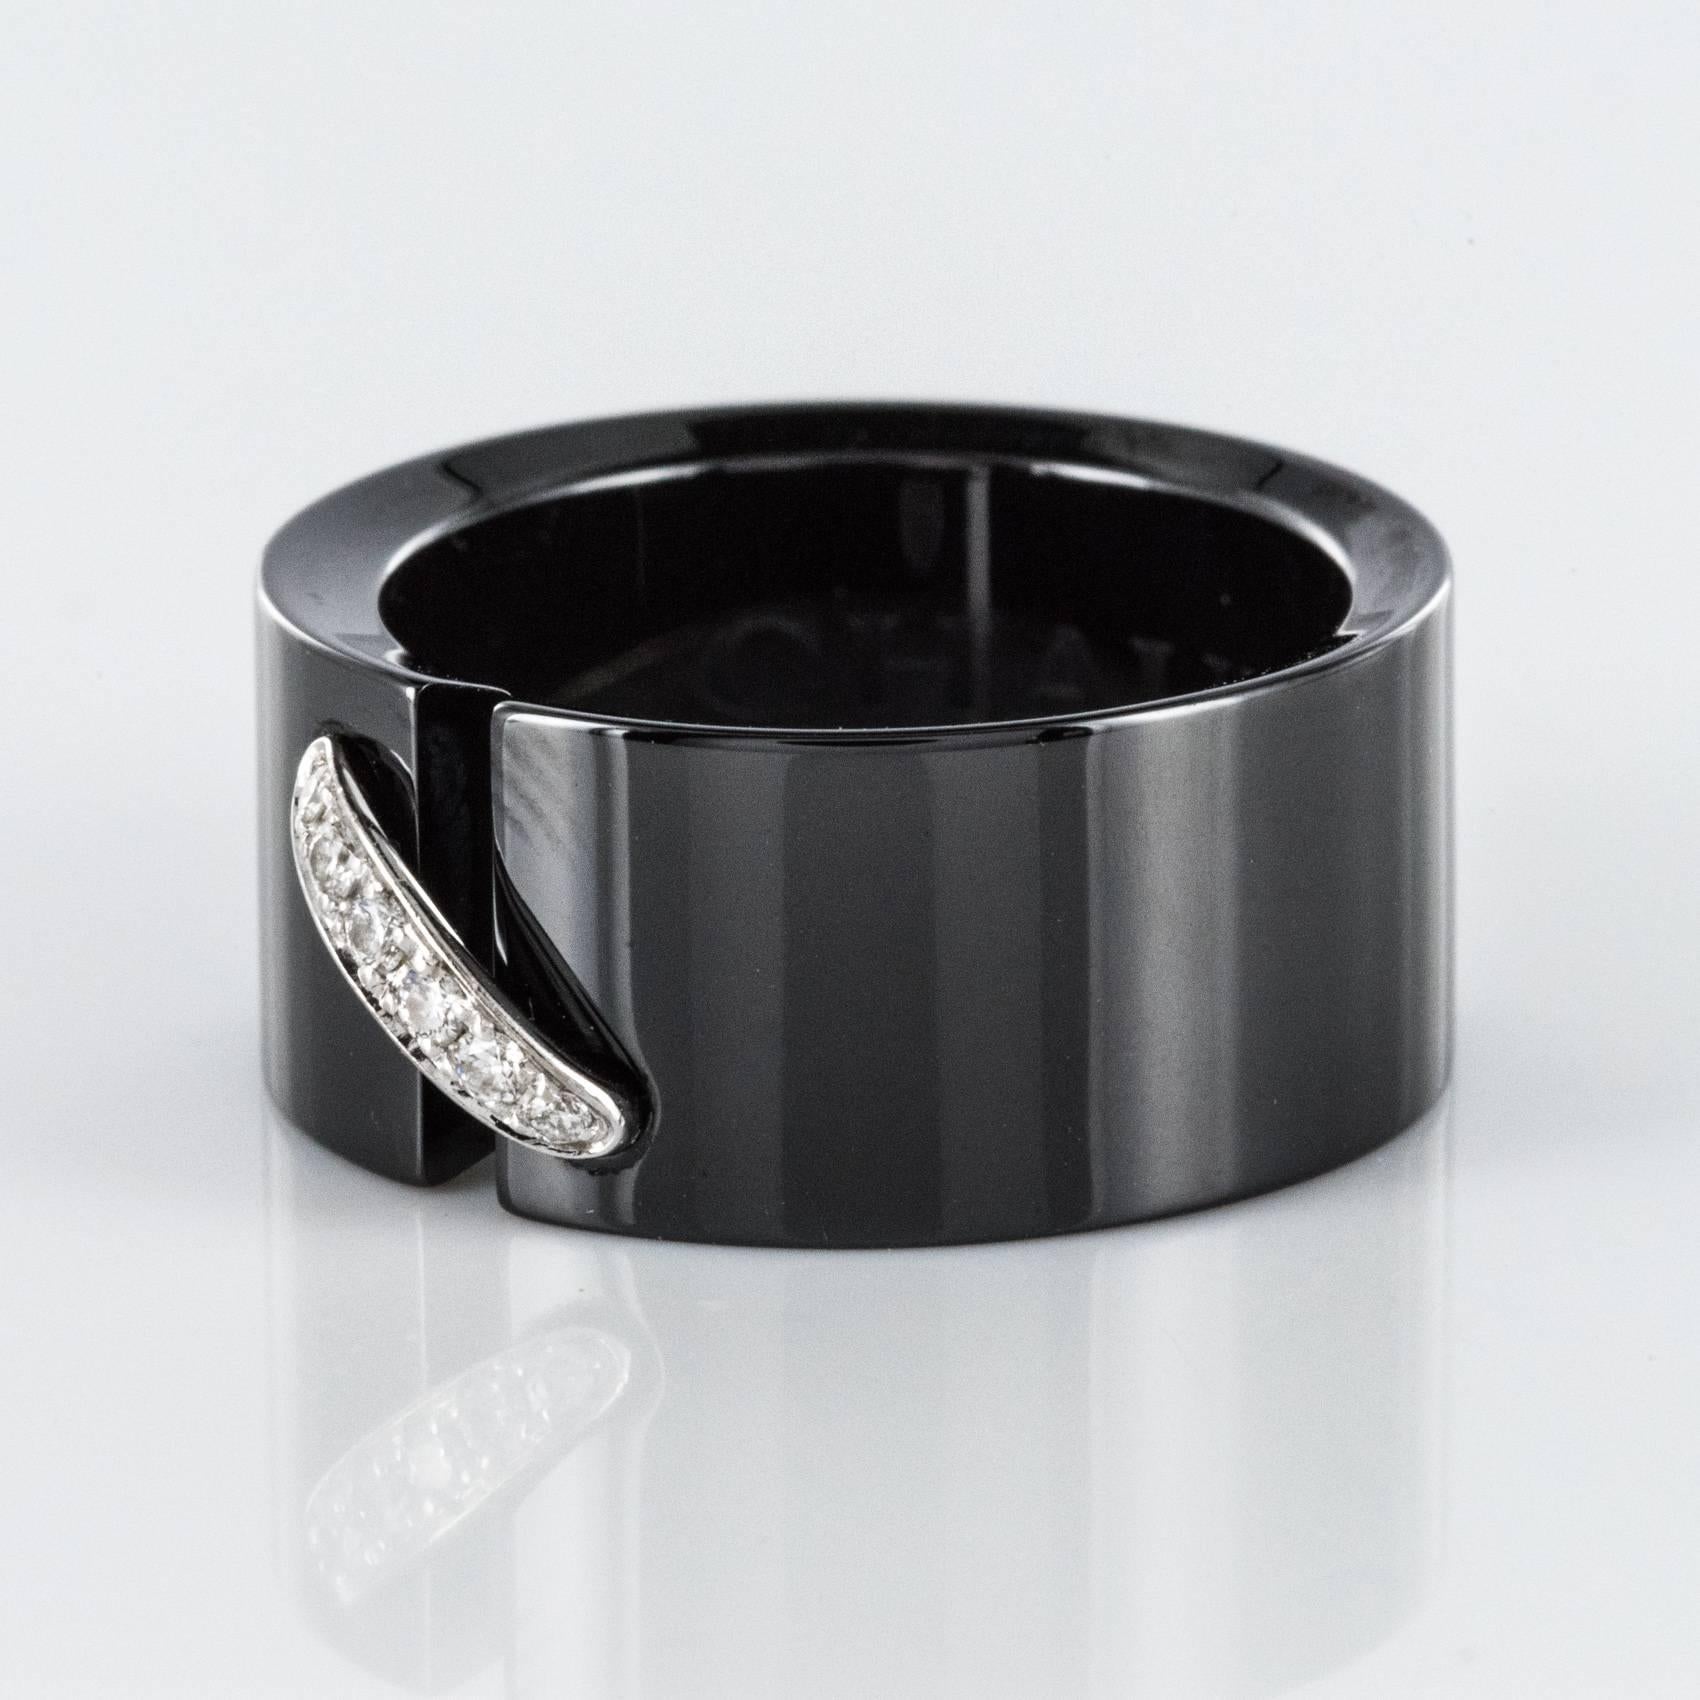 black ceramic ring